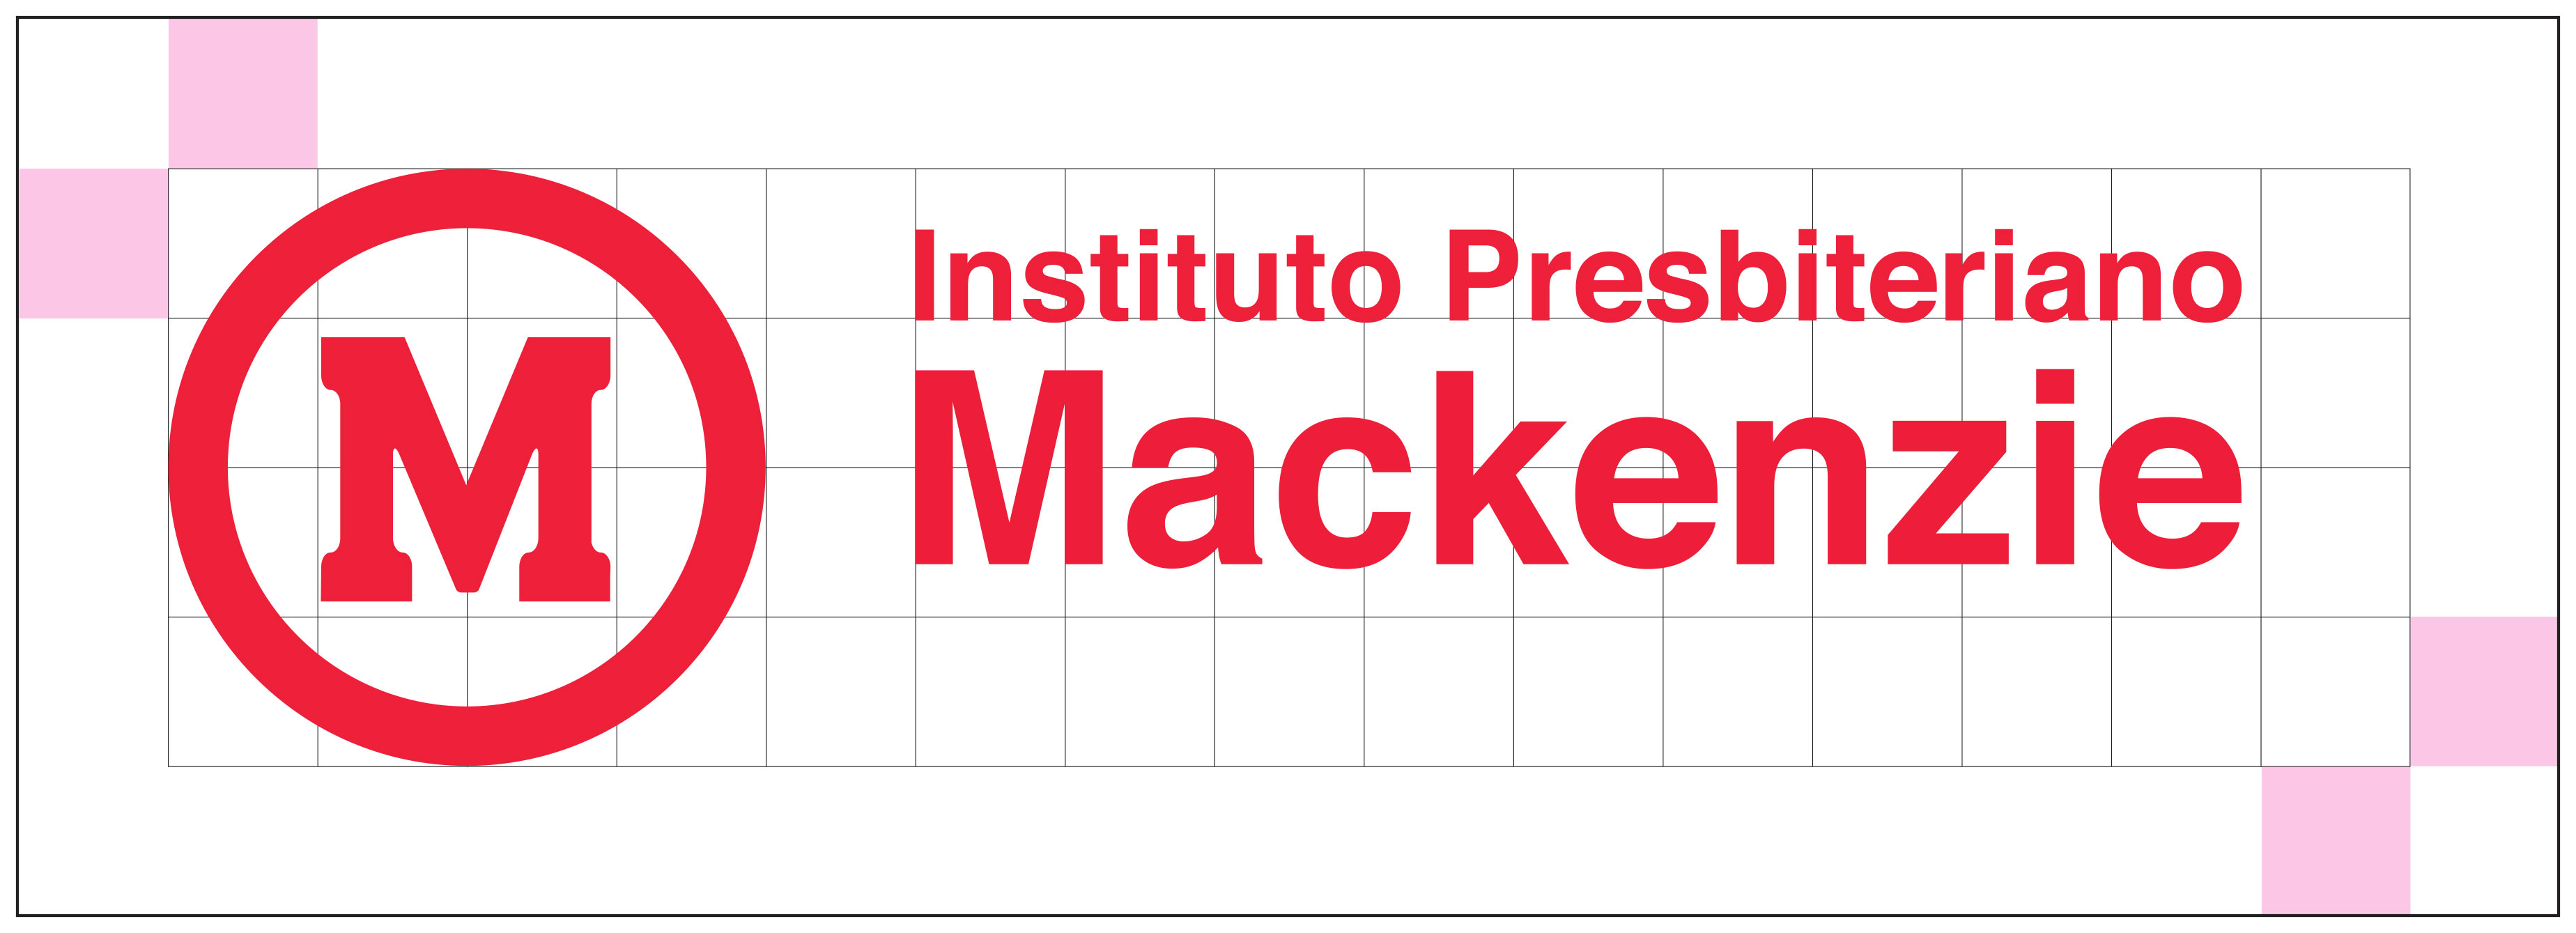 Logo do Instituto Presbiteriano Mackenzie